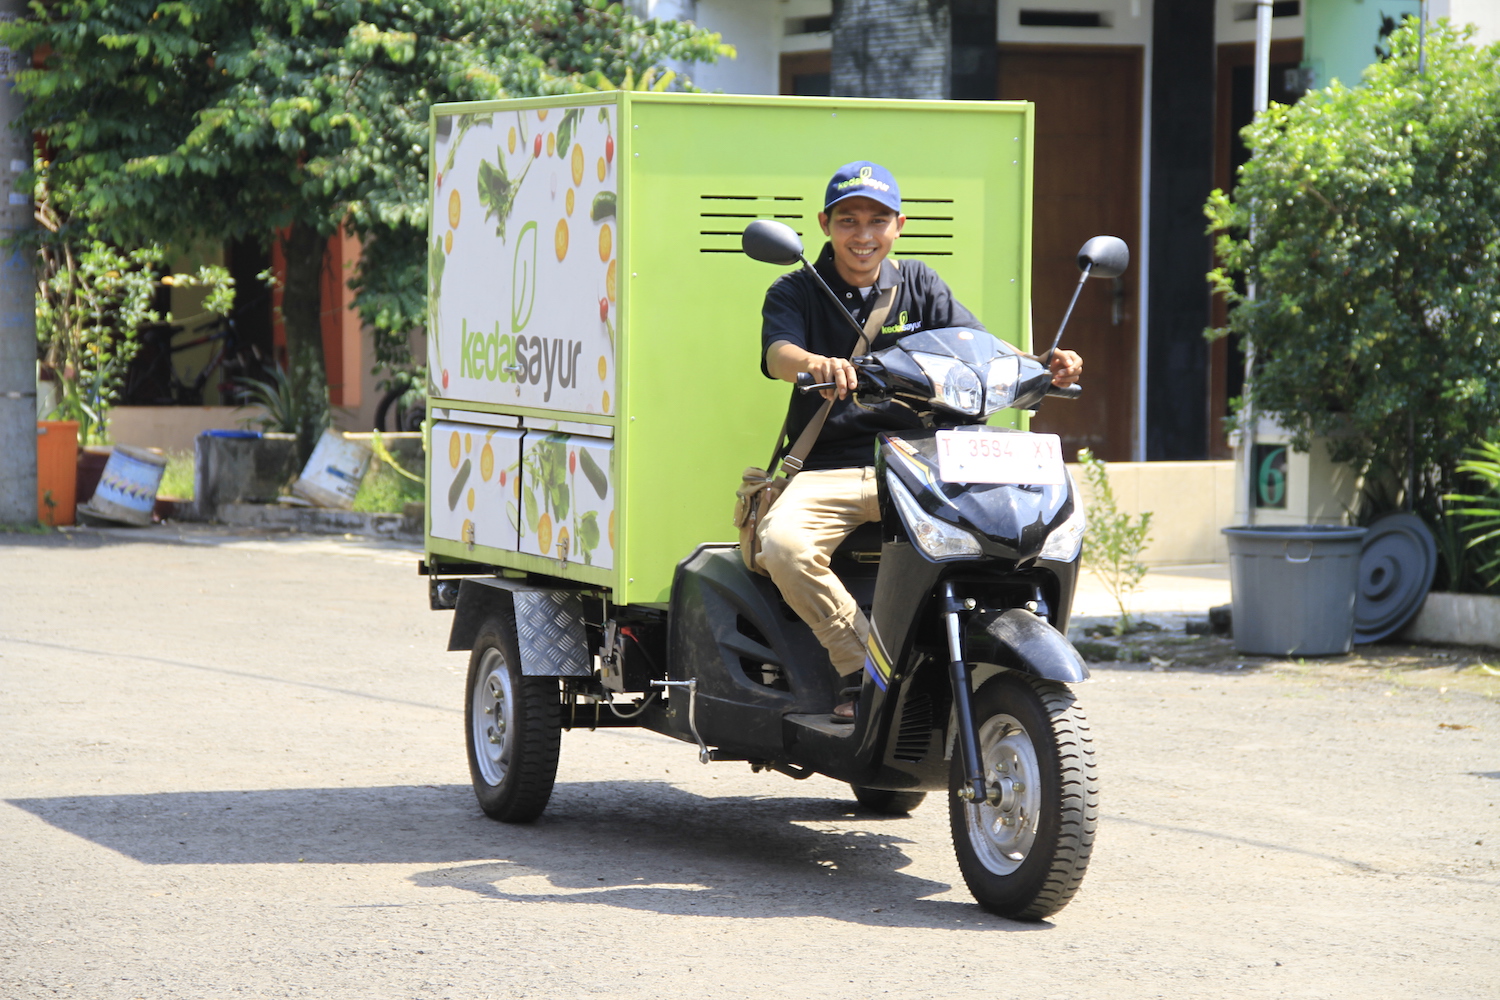 Indonesian agritech startup Kedai Sayur raises USD 1.3 million in seed funding